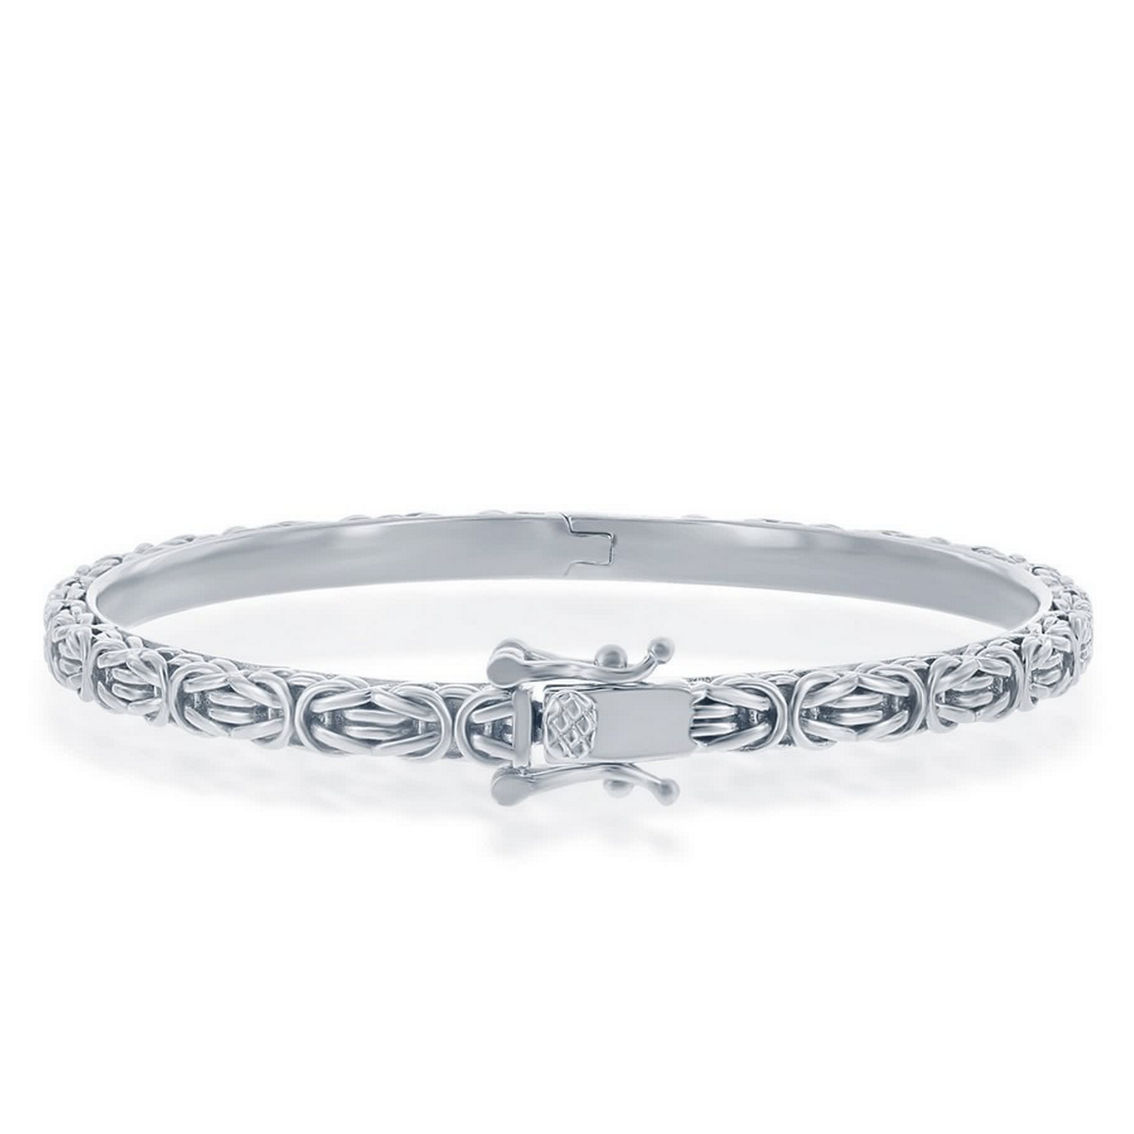 Bella Silver, Sterling Silver Byzantine Design Bangle Bracelet - Image 2 of 3